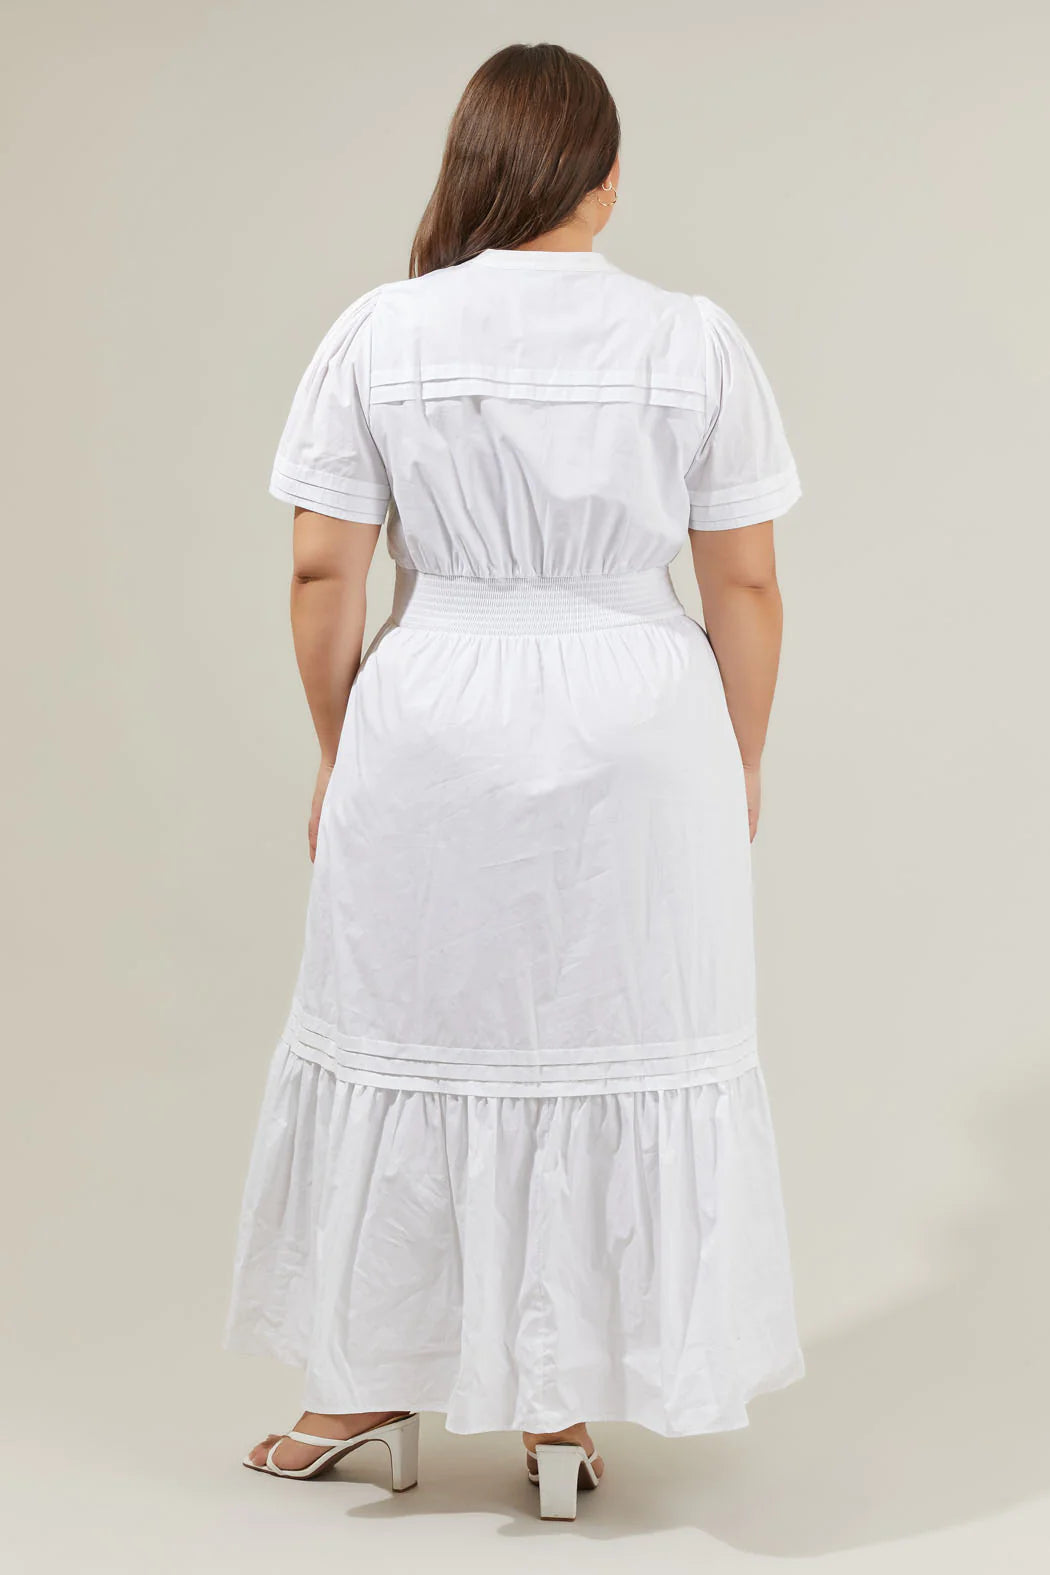 CARRIE WHITE DRESS